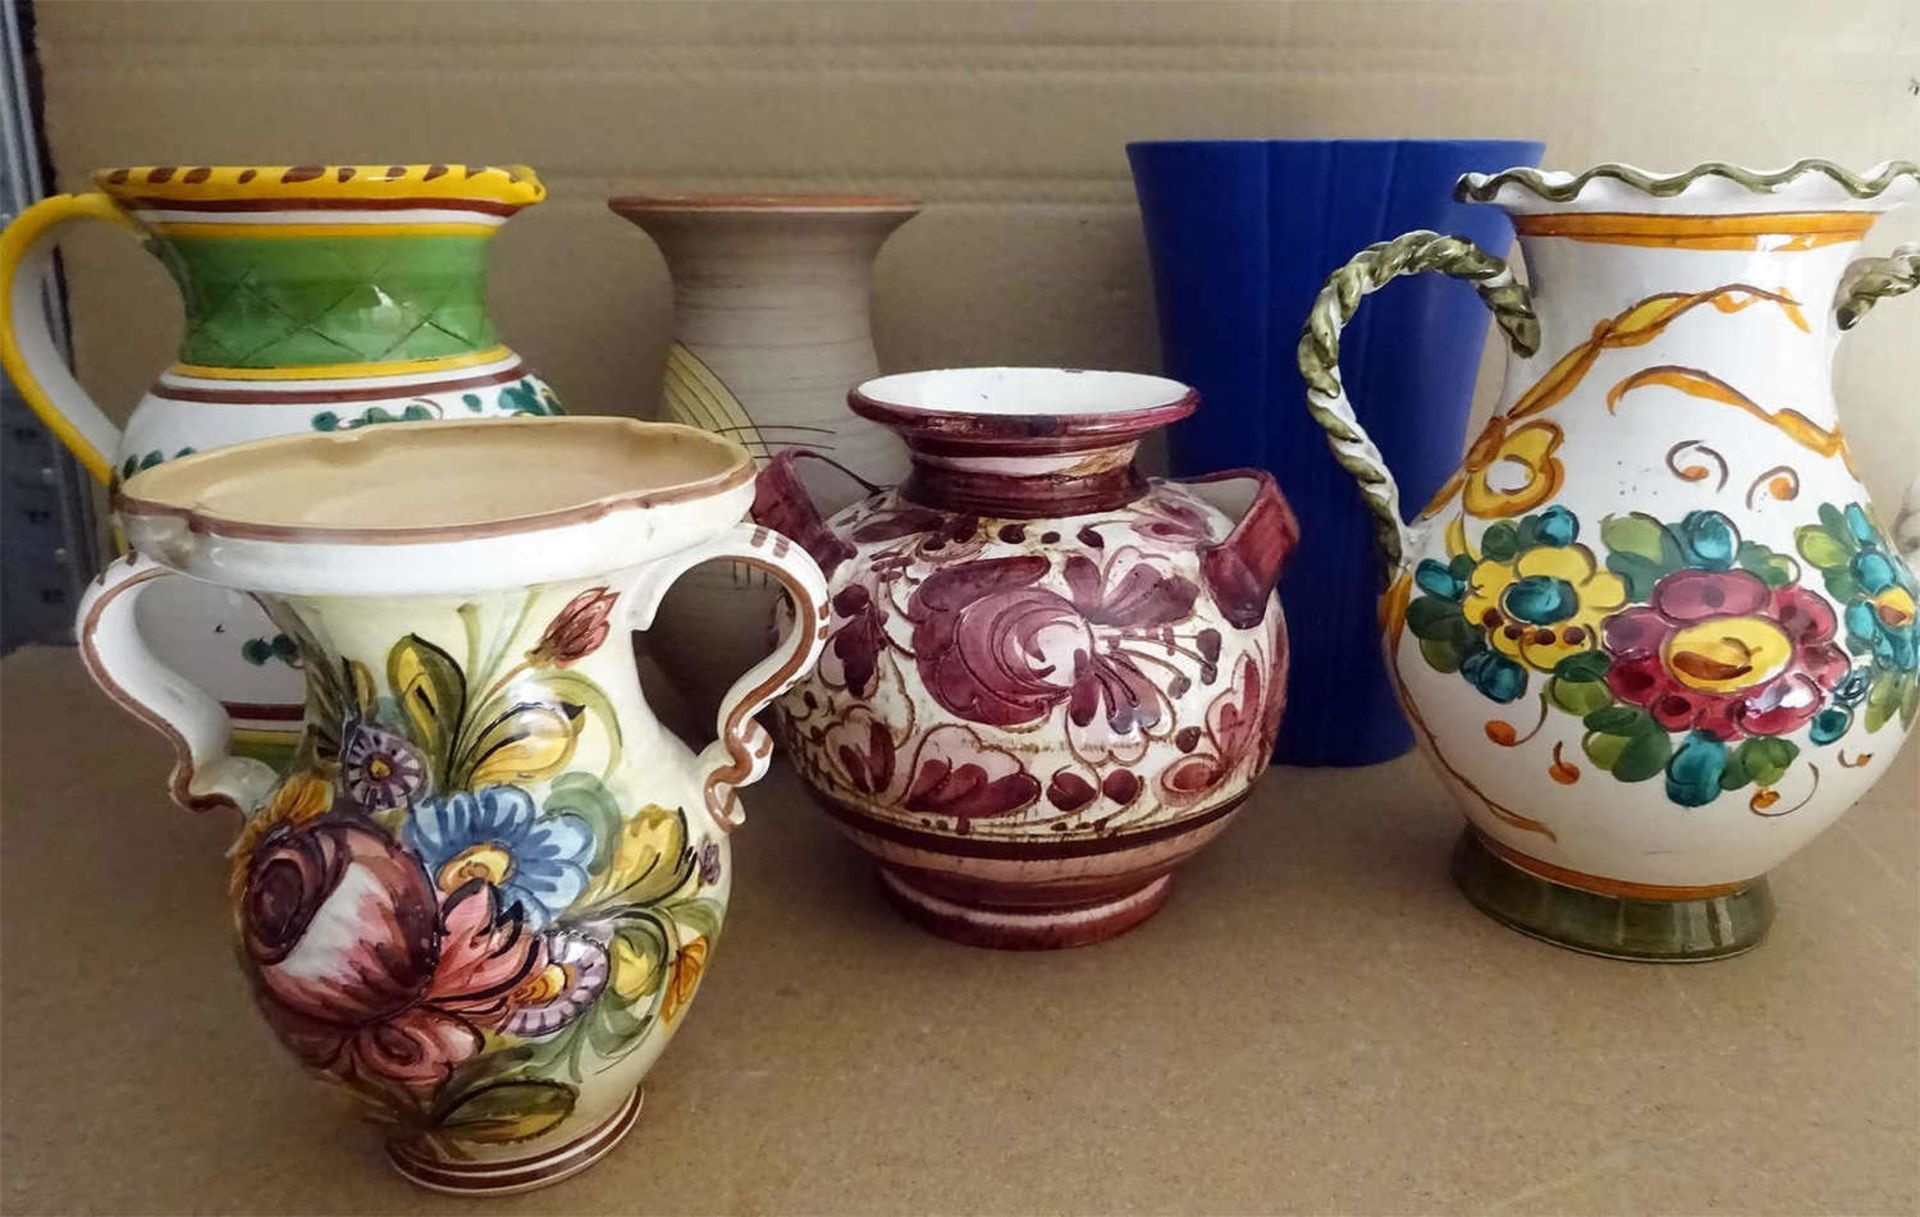 Lot Keramik, meist Reisemitbringsel dabei Spanien, etc. Insgesamt 6 Vasen.Lot of ceramics, mostly